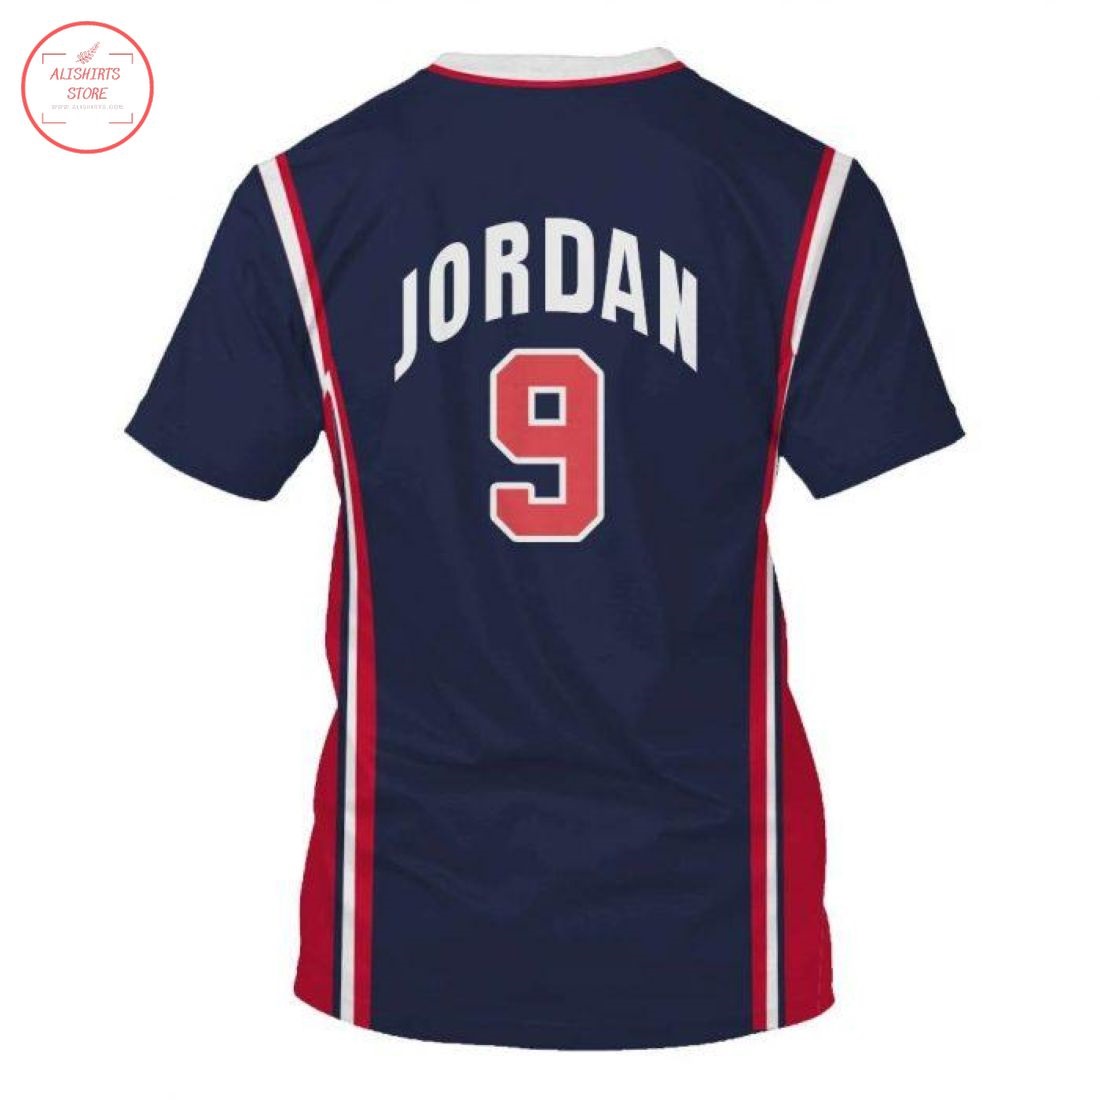 Michael Jordan 9 Limited Edition USA Shirt